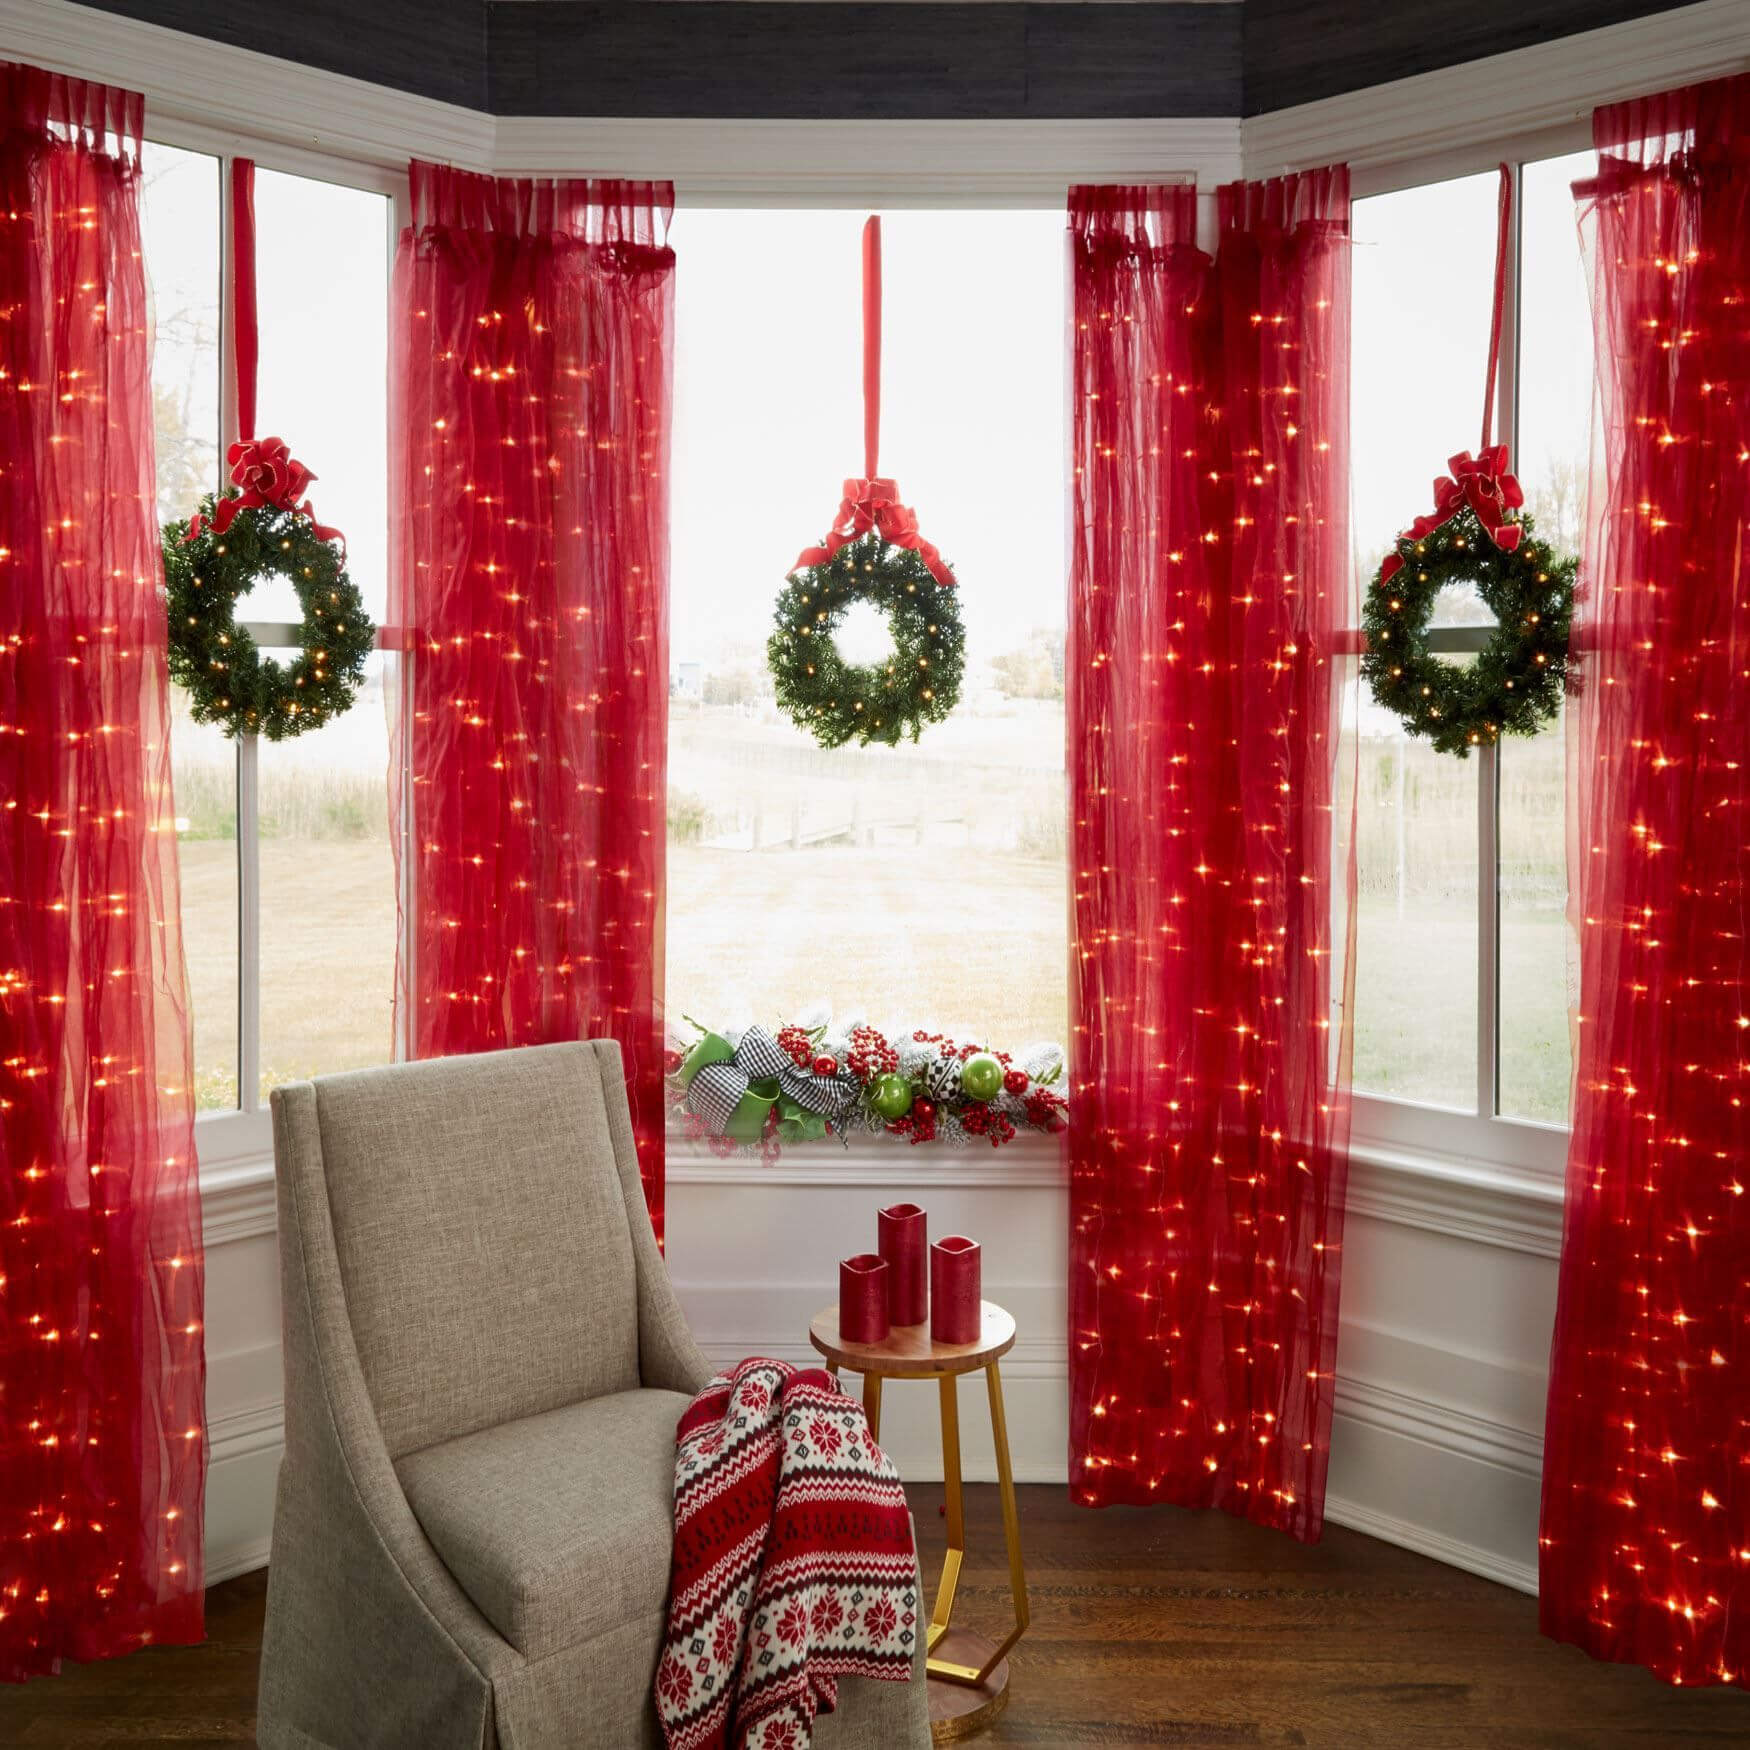 Windows Christmas Wreaths Decoration